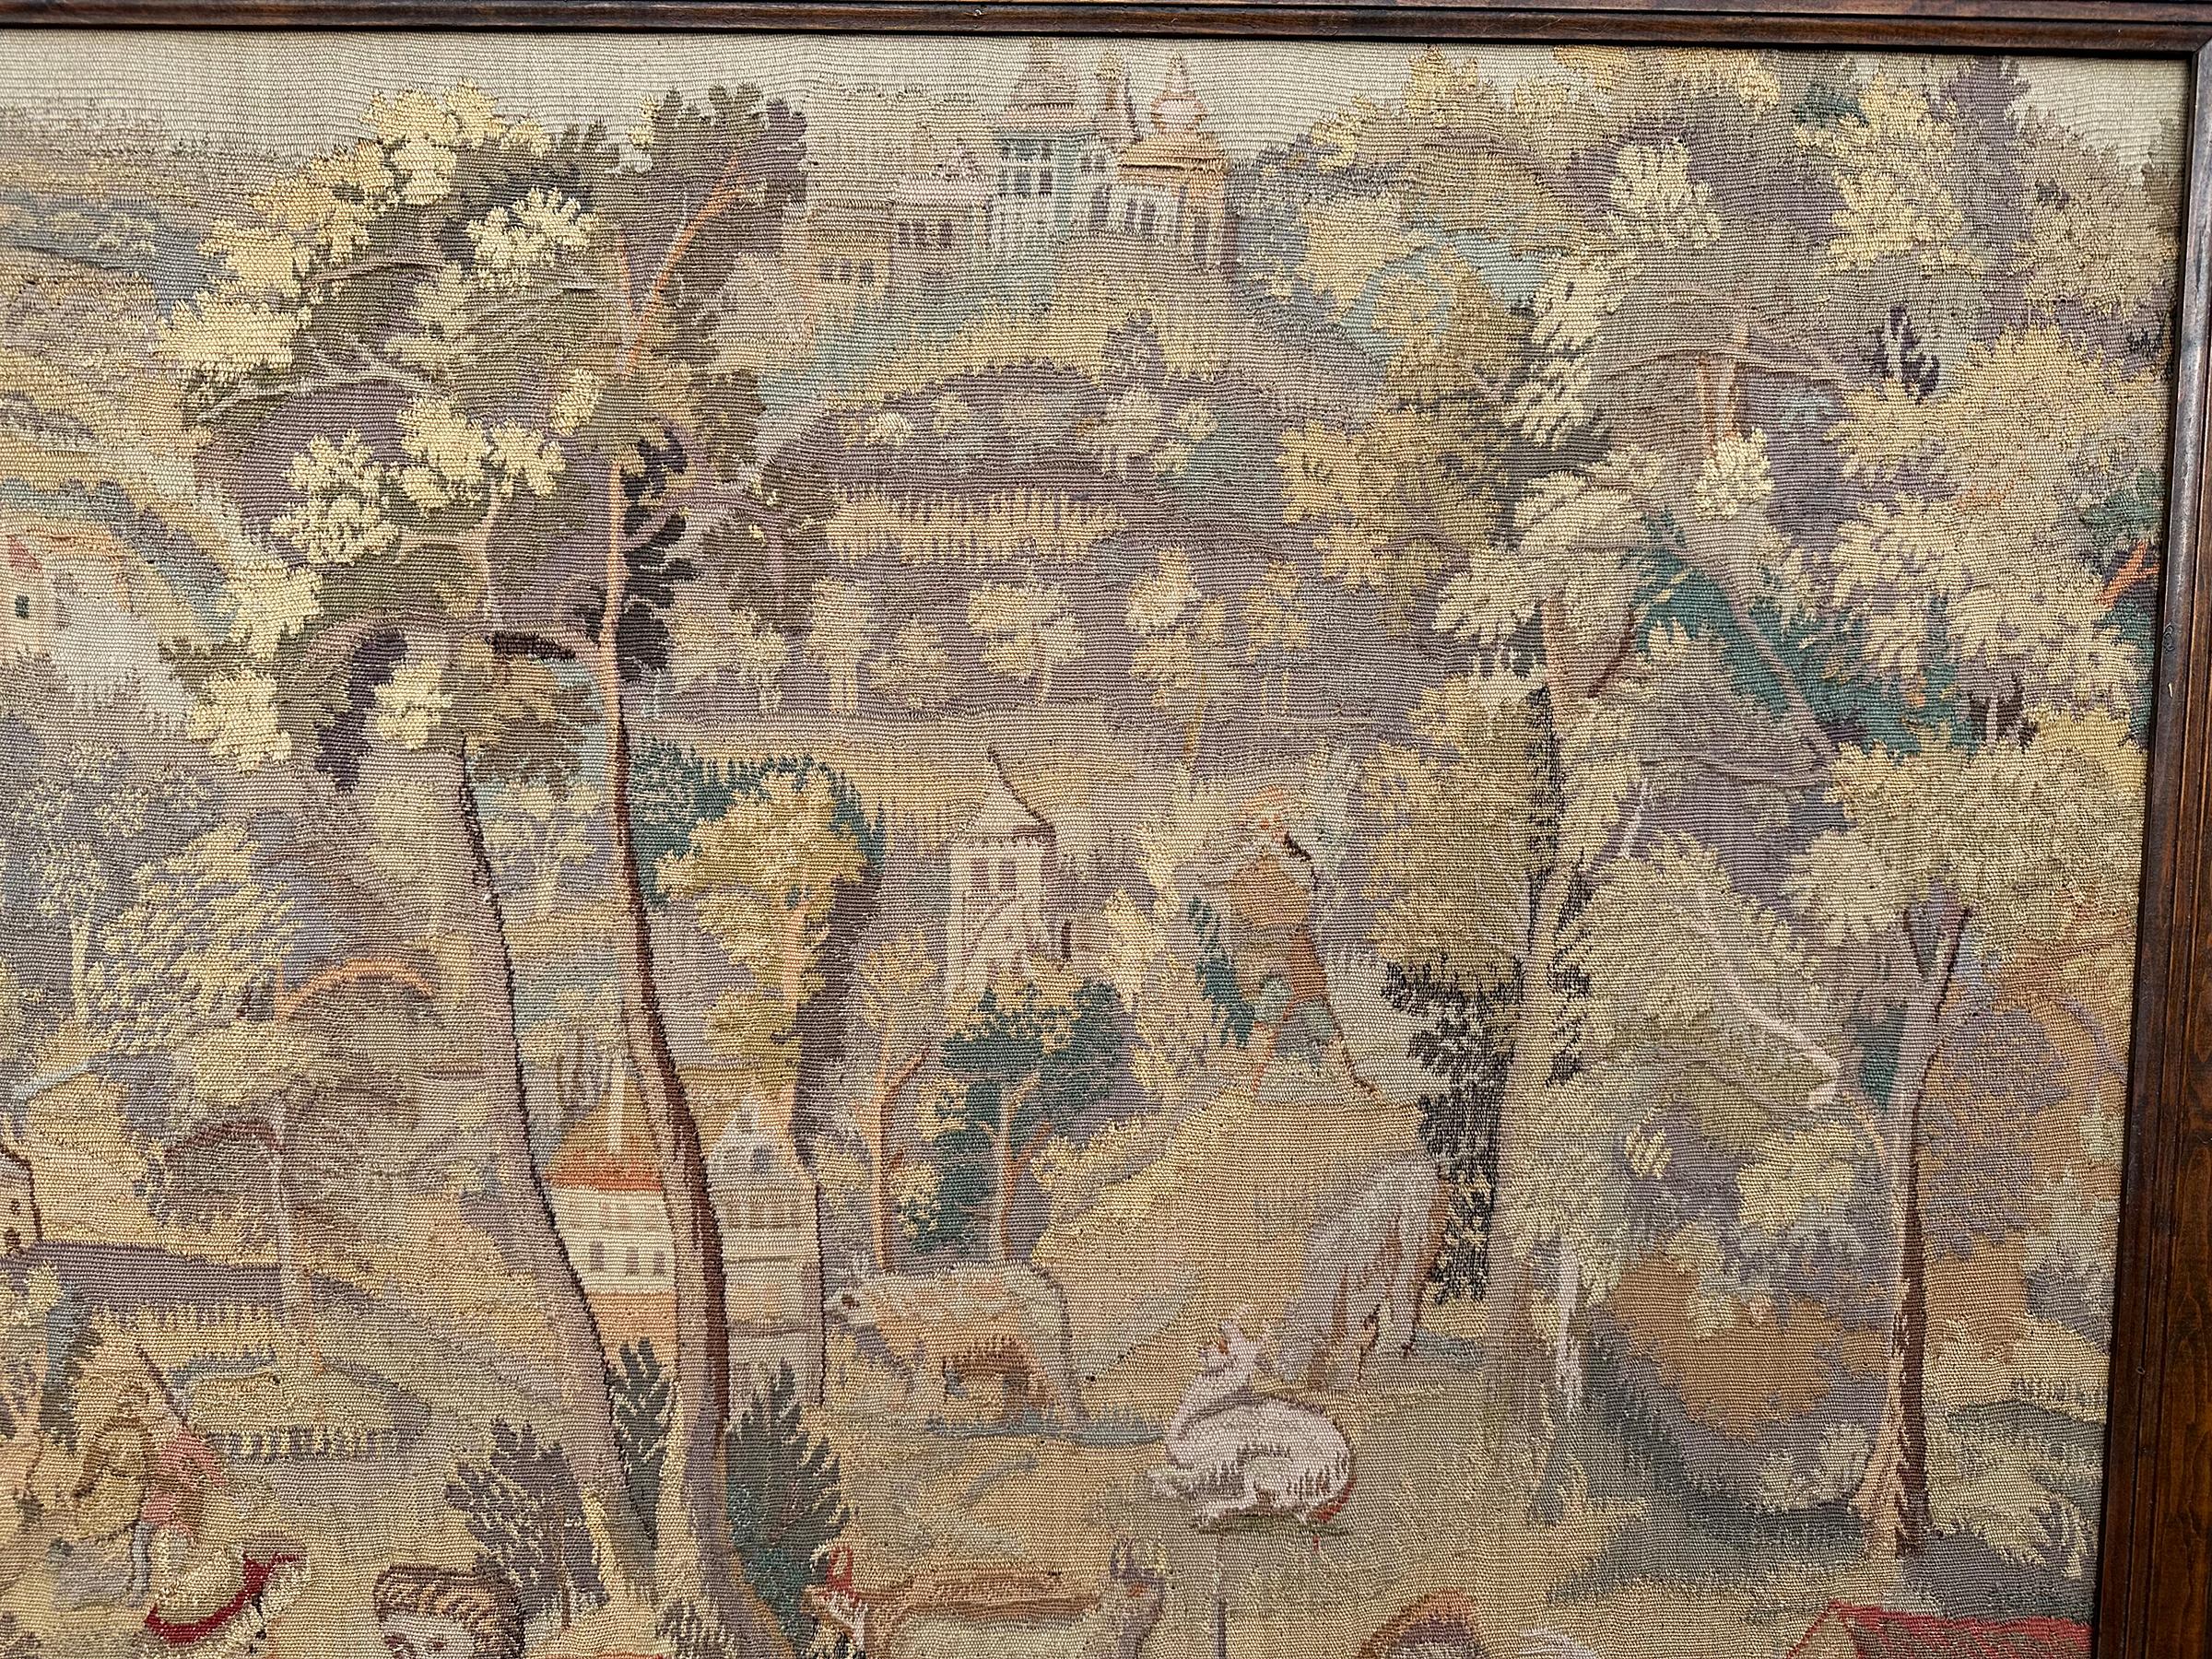 1920 Antique French Tapestry Wool & Silk Village Scene Framed 3x4

